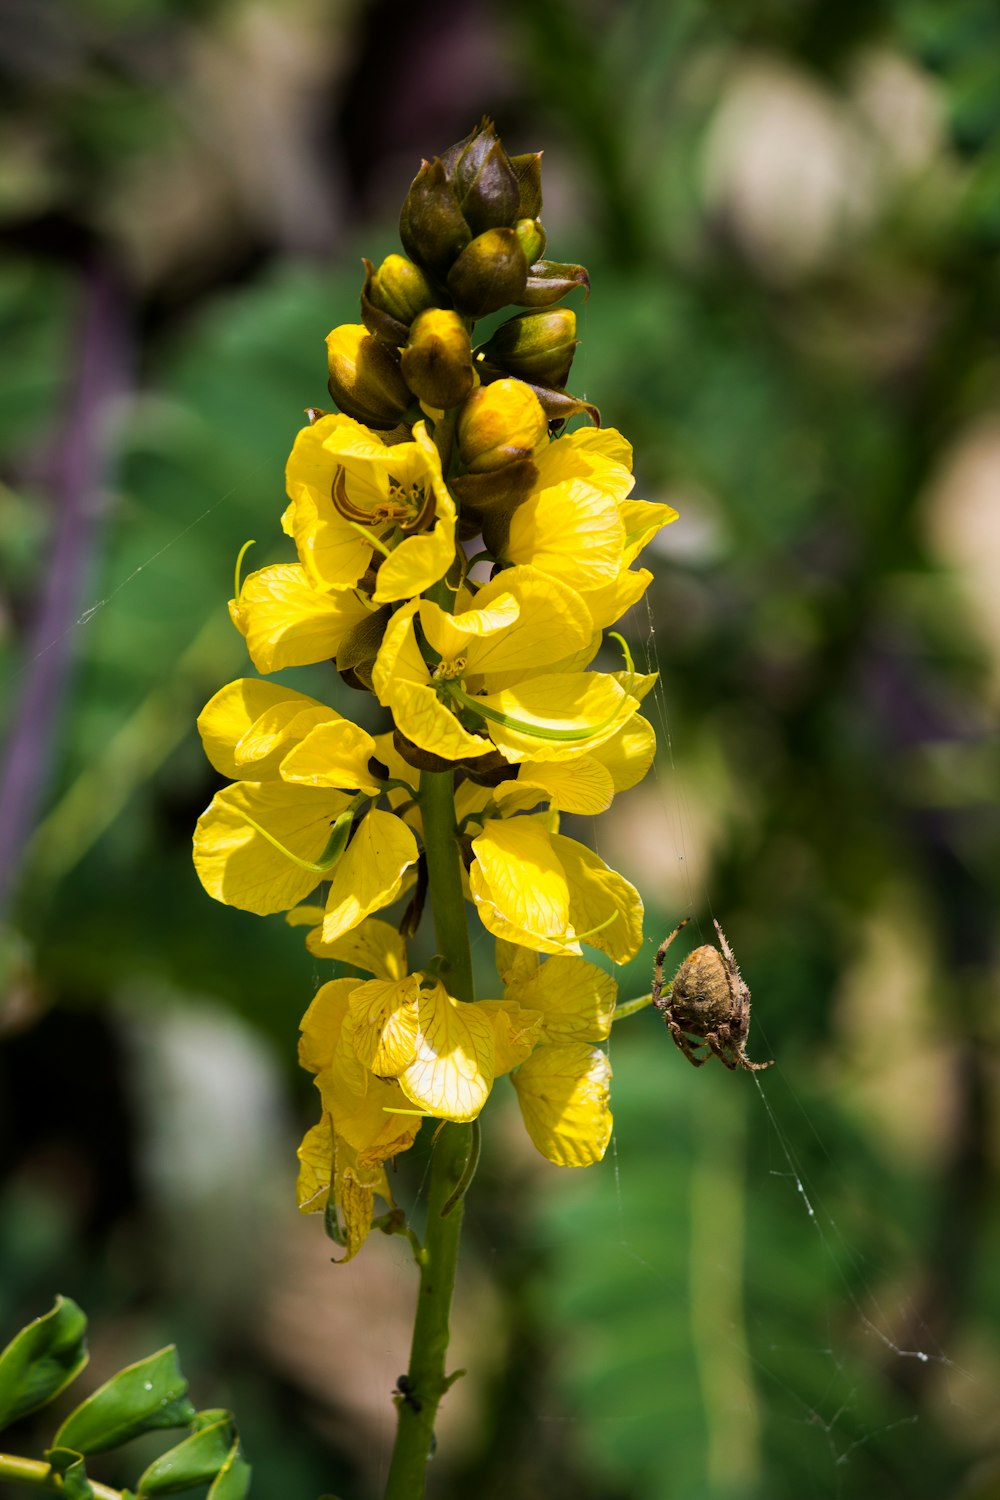 brown barn spider near yellow flowers